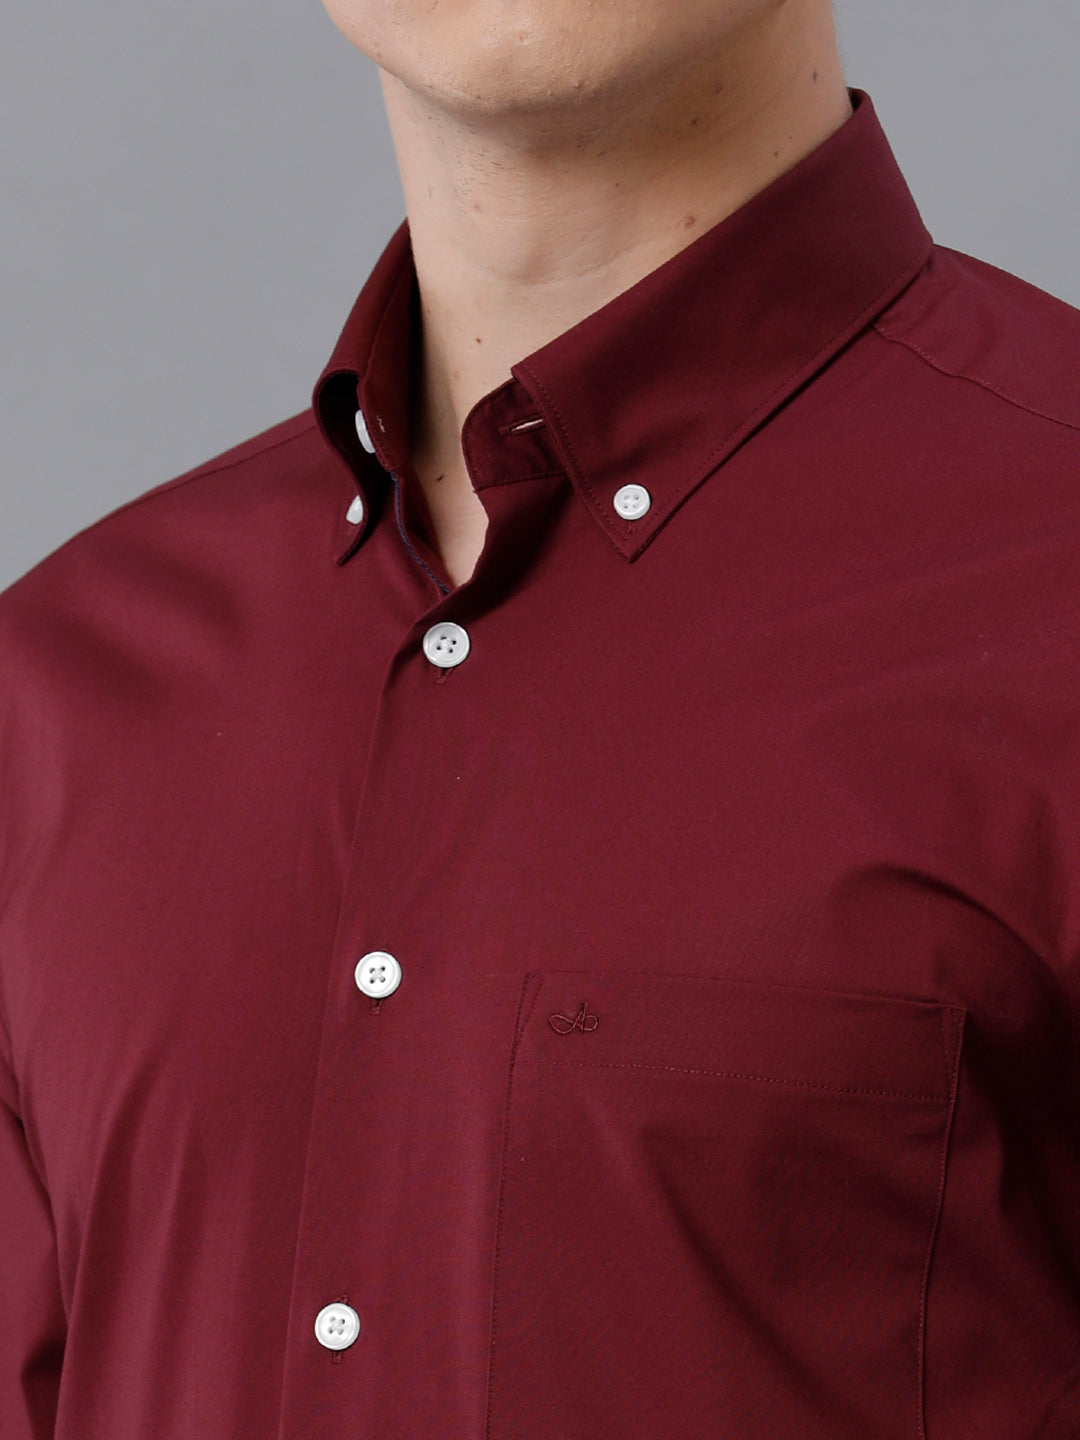 Aldeno Mens Slim Fit Wine Red Solid Formal Cotton Stretch Shirt (MONMUR)